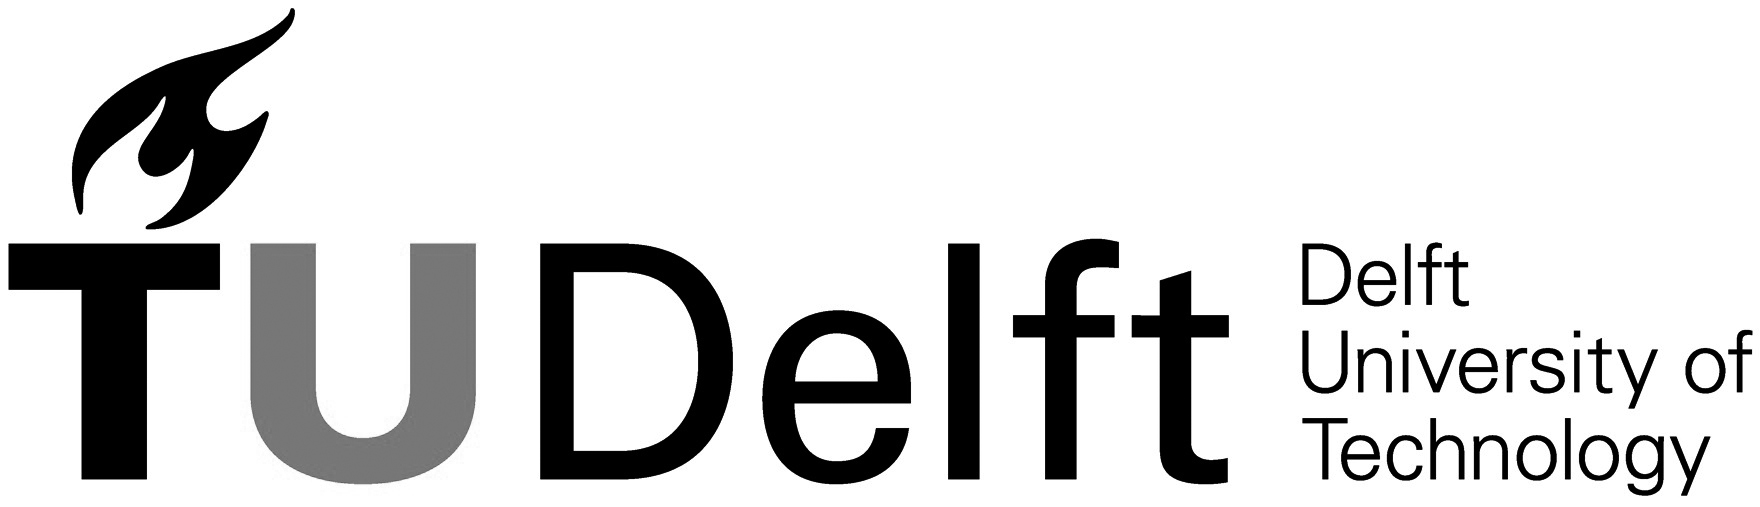 zww_TU.Delft_logo